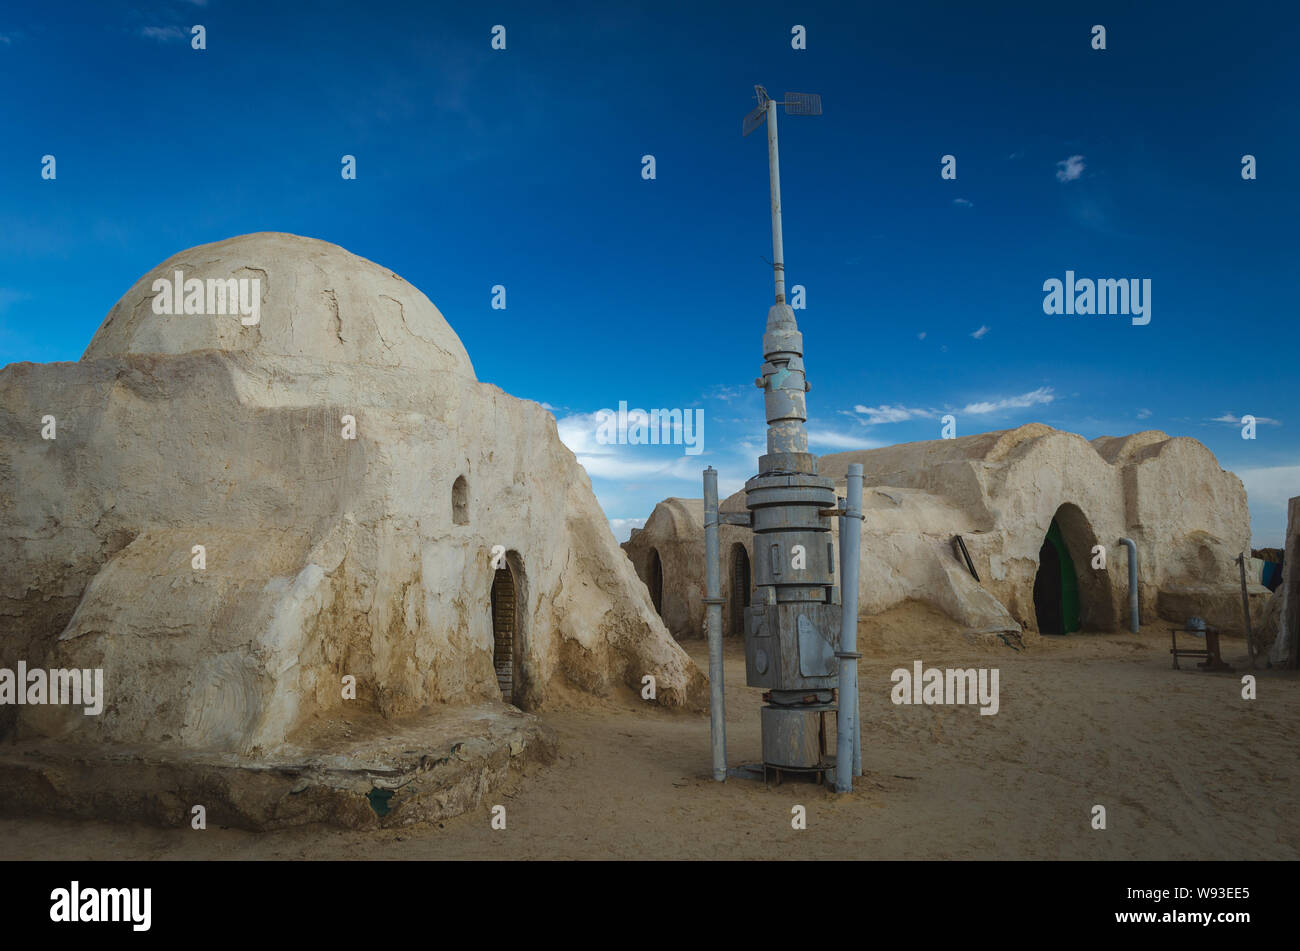 Star wars set up decor for the movie. Sahara desert, Tunisia. Stock Photo